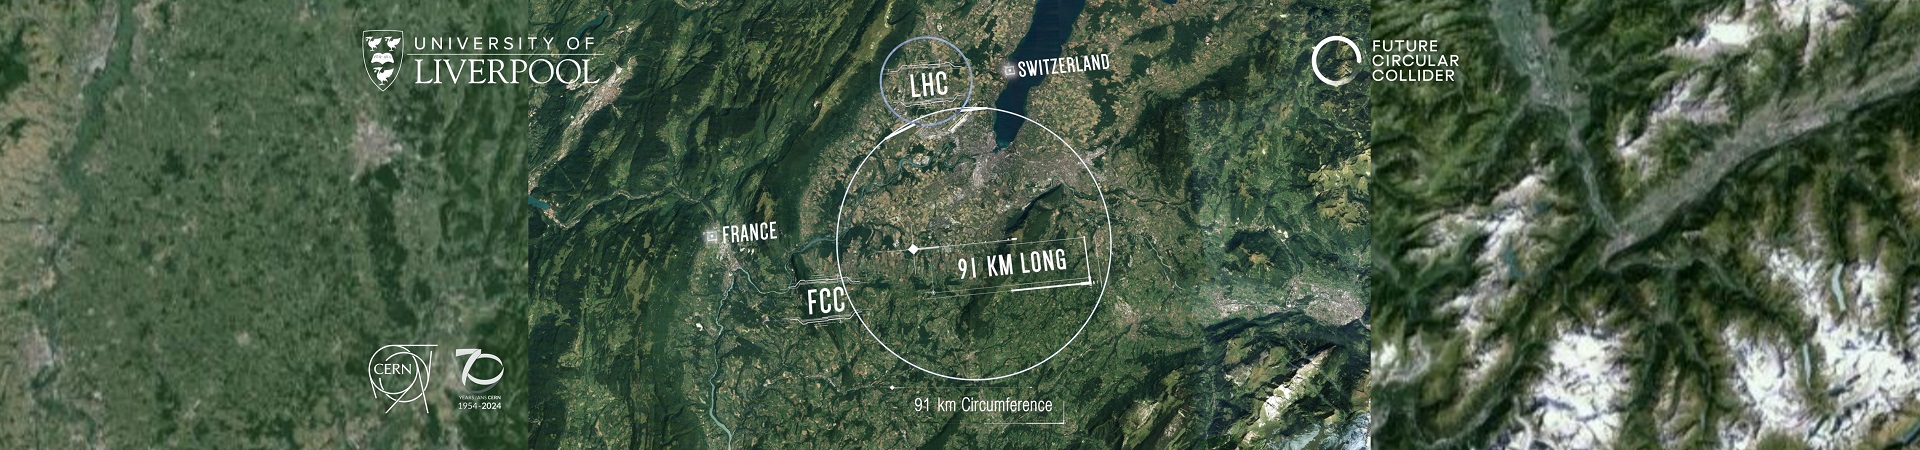 Run the length of the Future Circular Collider - 100km